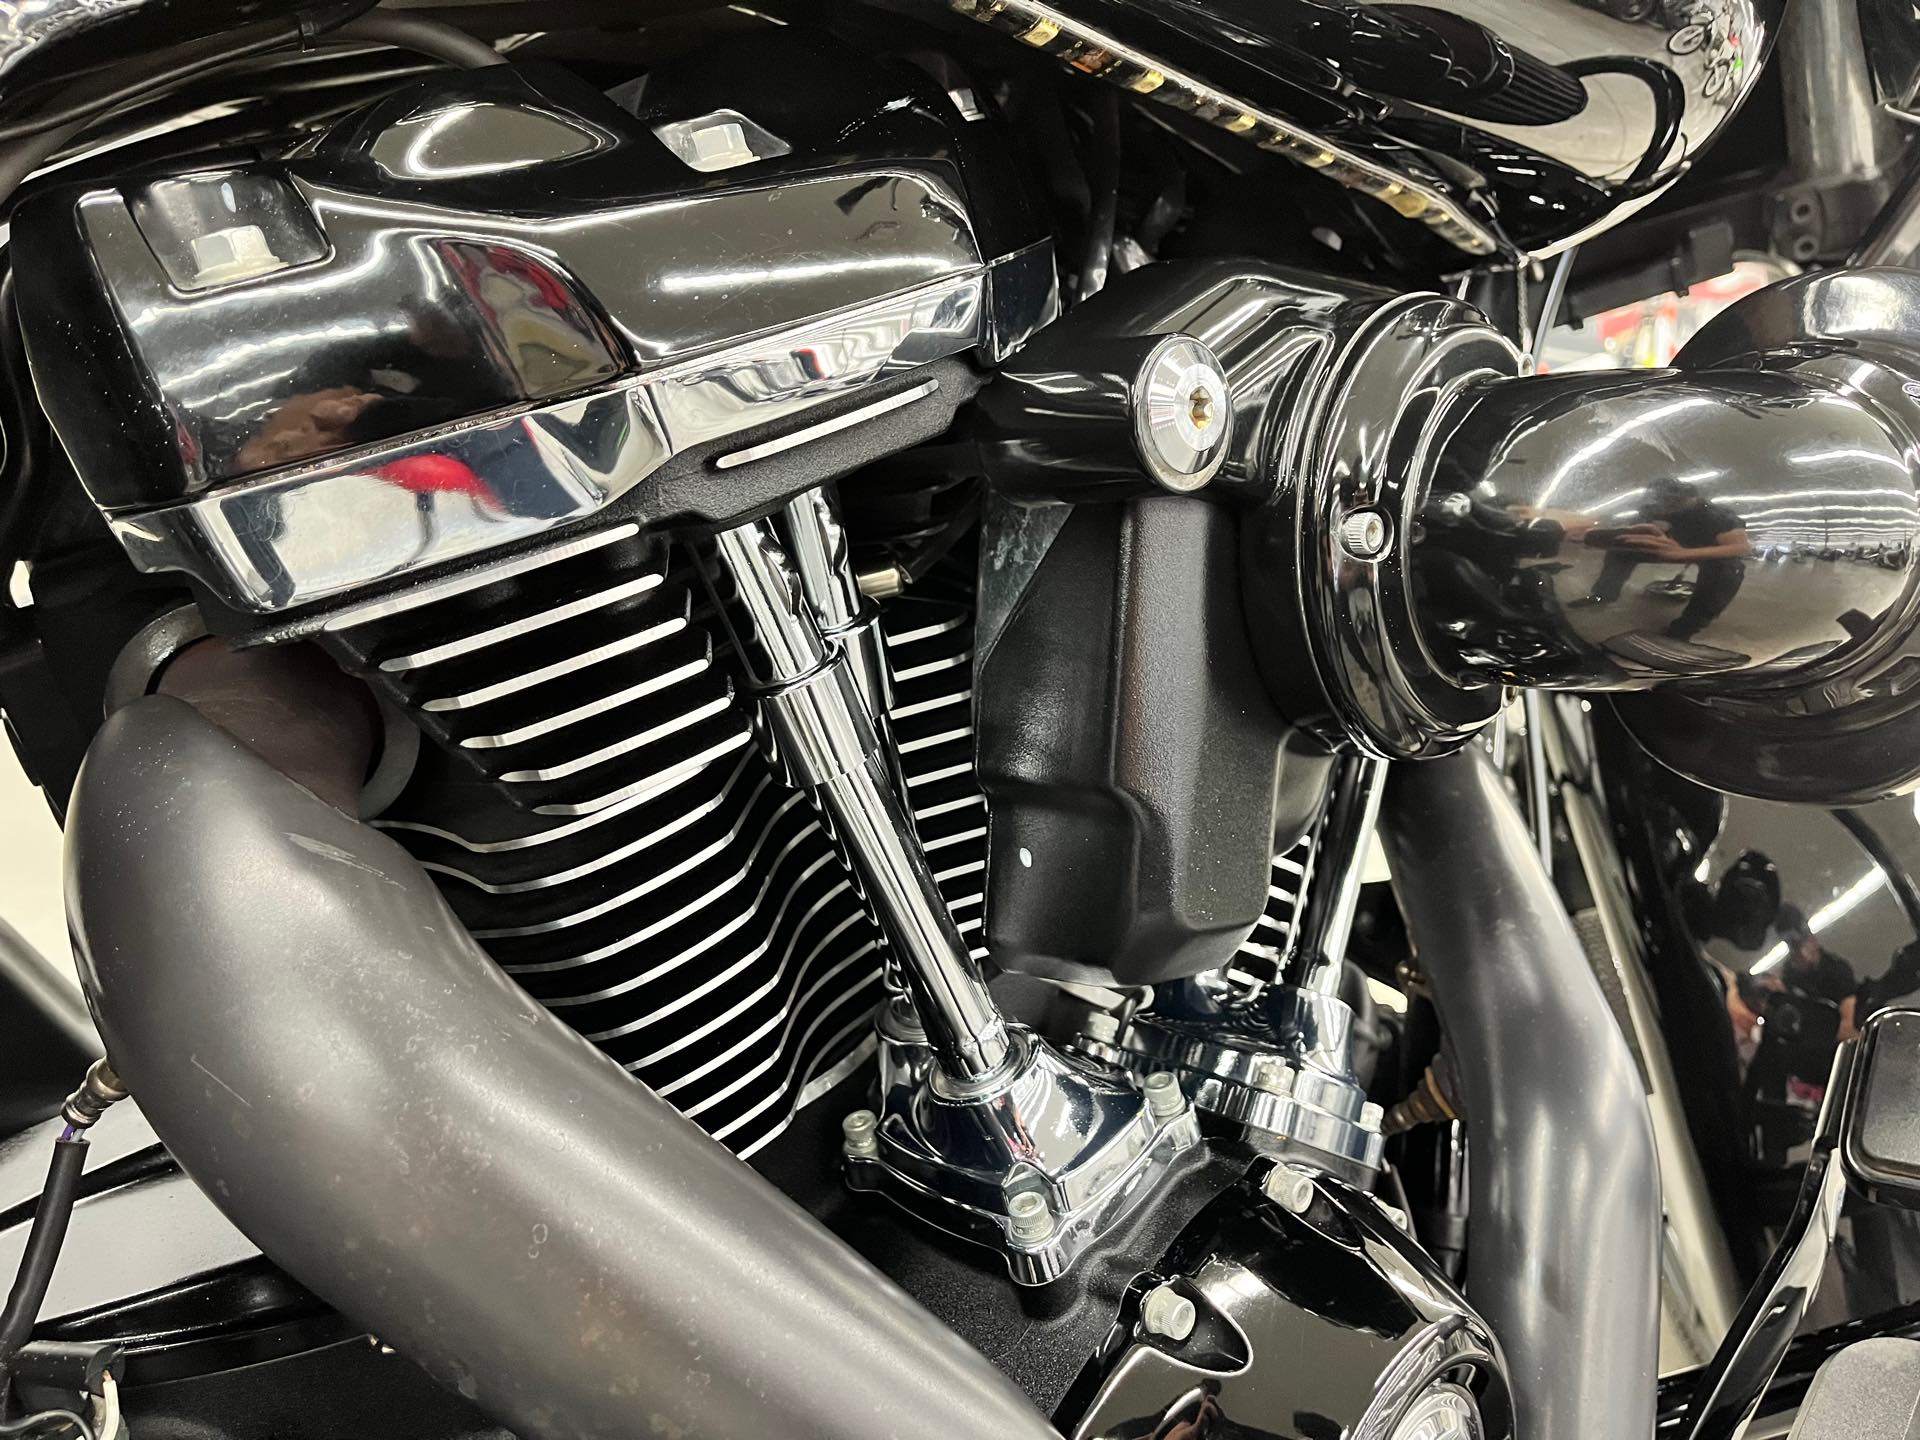 2018 Harley-Davidson Road Glide Special at Aces Motorcycles - Denver